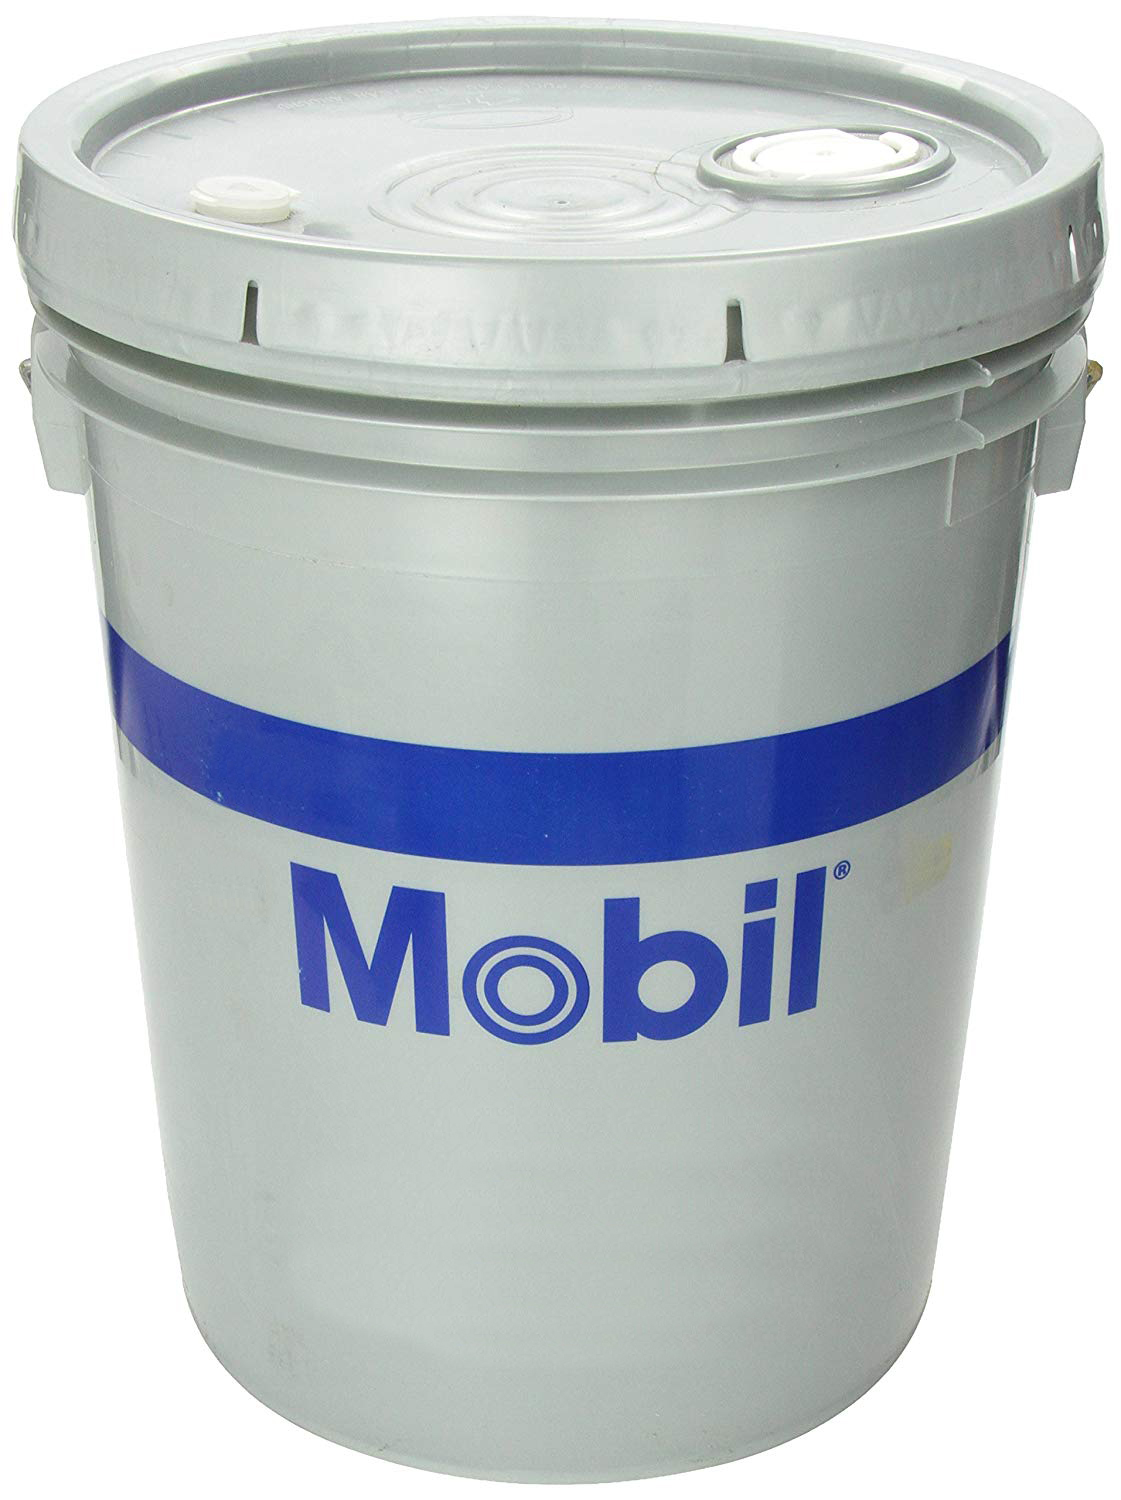 MOBIL SHC 824 (100% SYNTHETIC, ISO-32, GAS TURBINE OIL) - 5 Gallon Pail